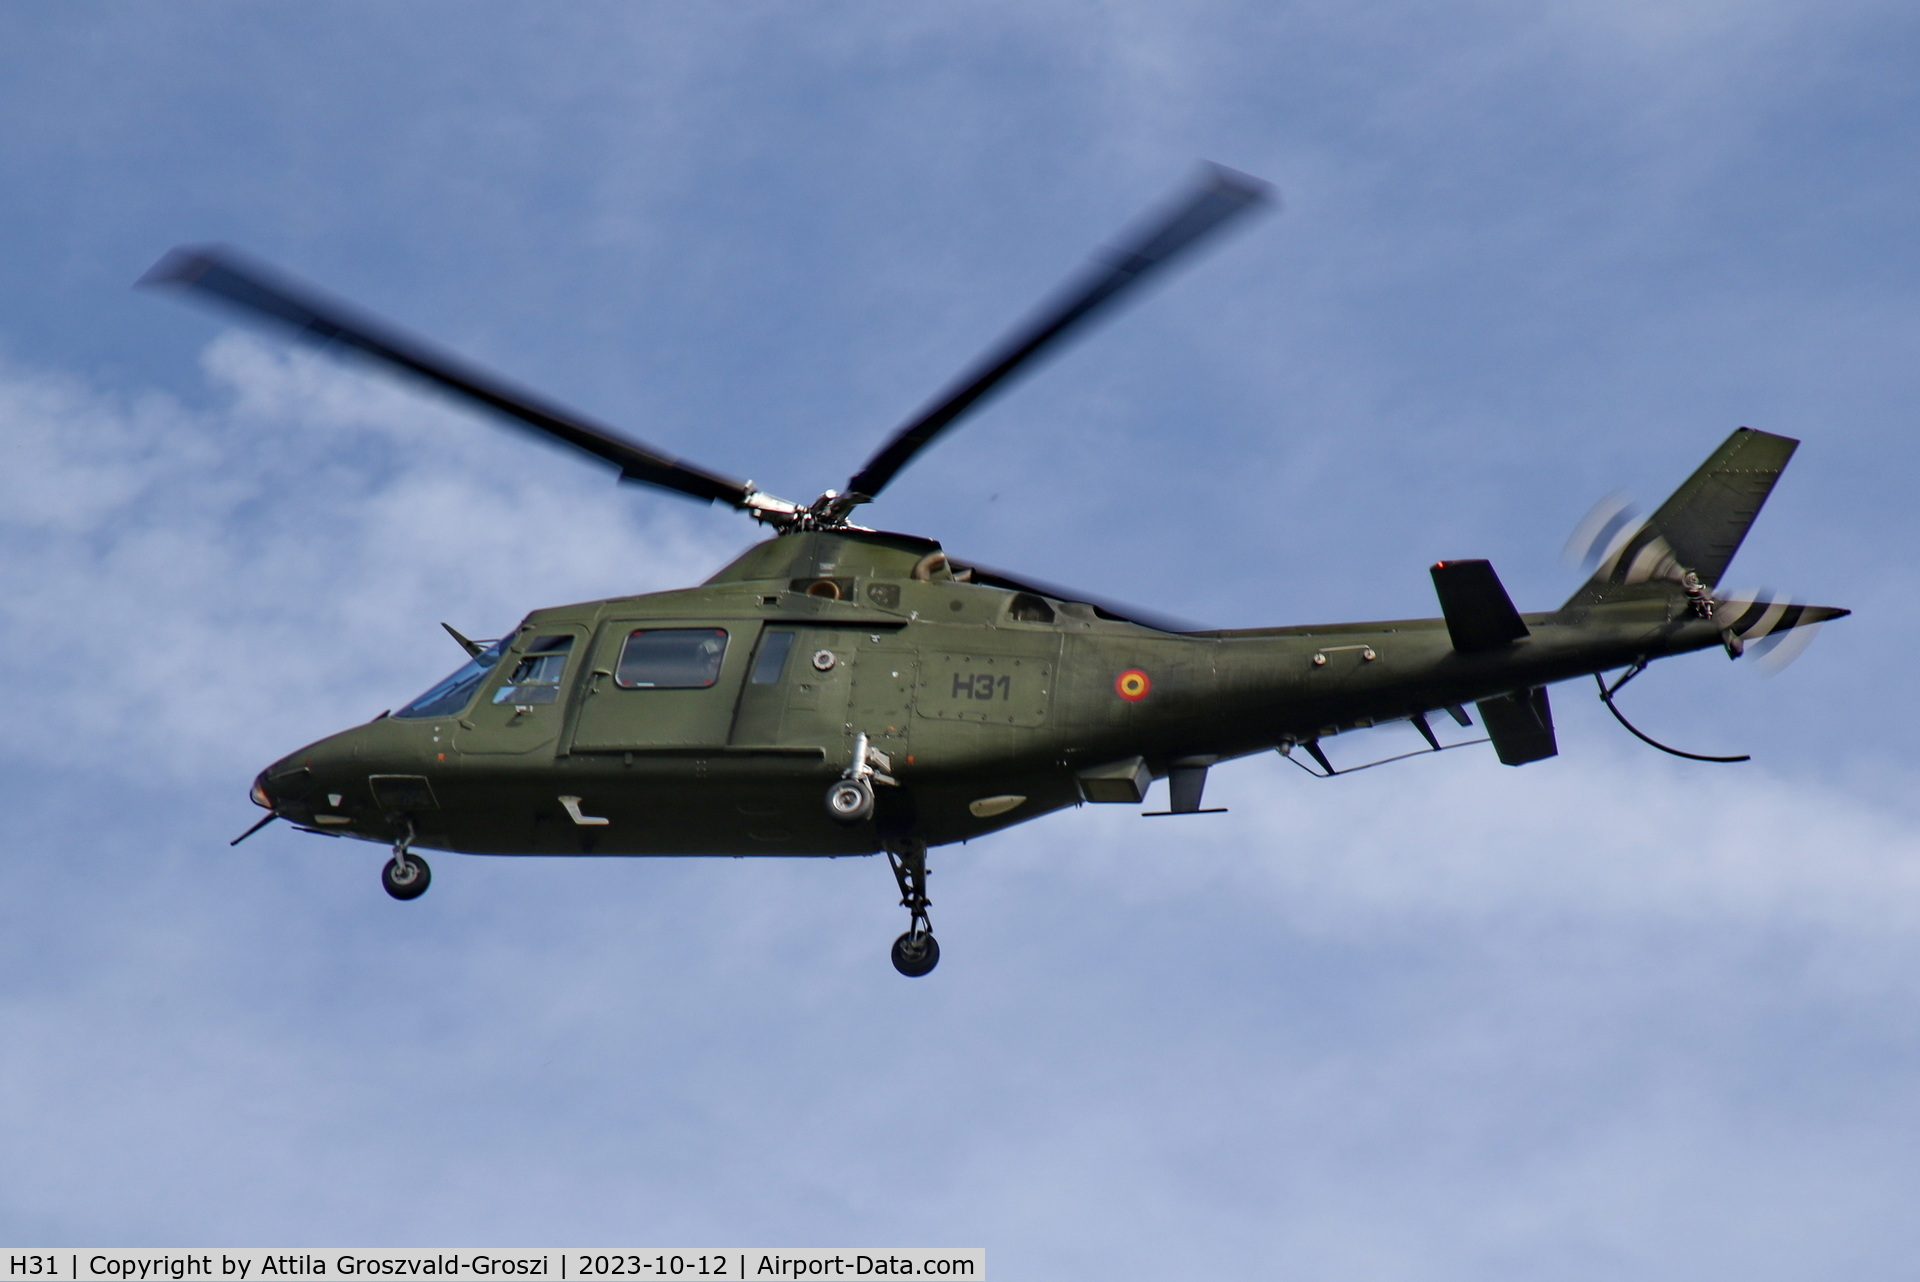 H31, Agusta A-109BA C/N 0331, Jutas-Ujmajor. The Hungarian airforce is his practising base